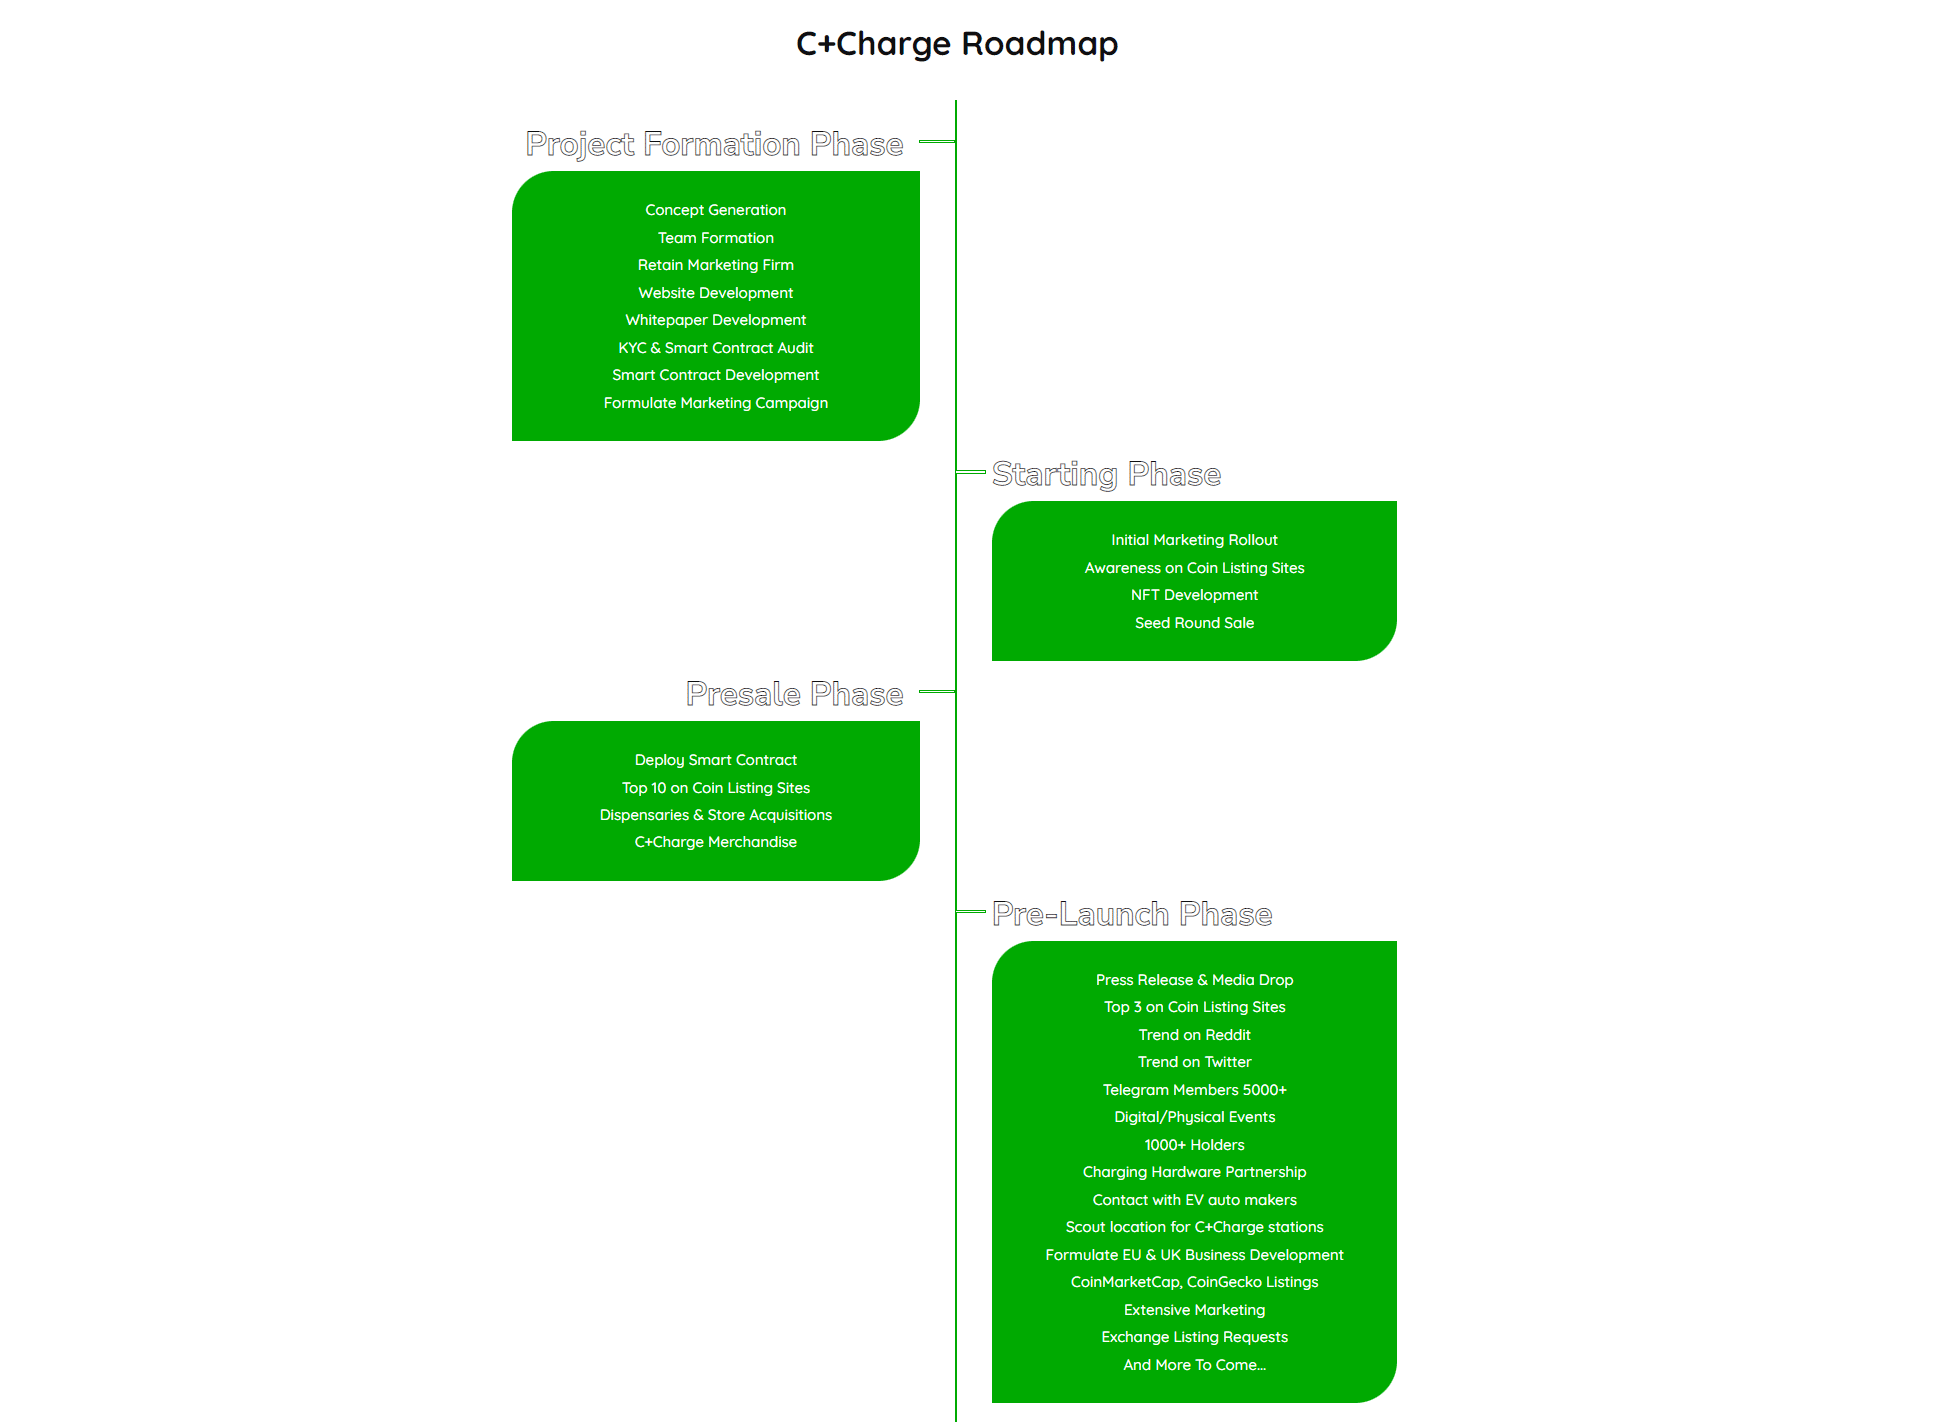 C+Charge roadmap